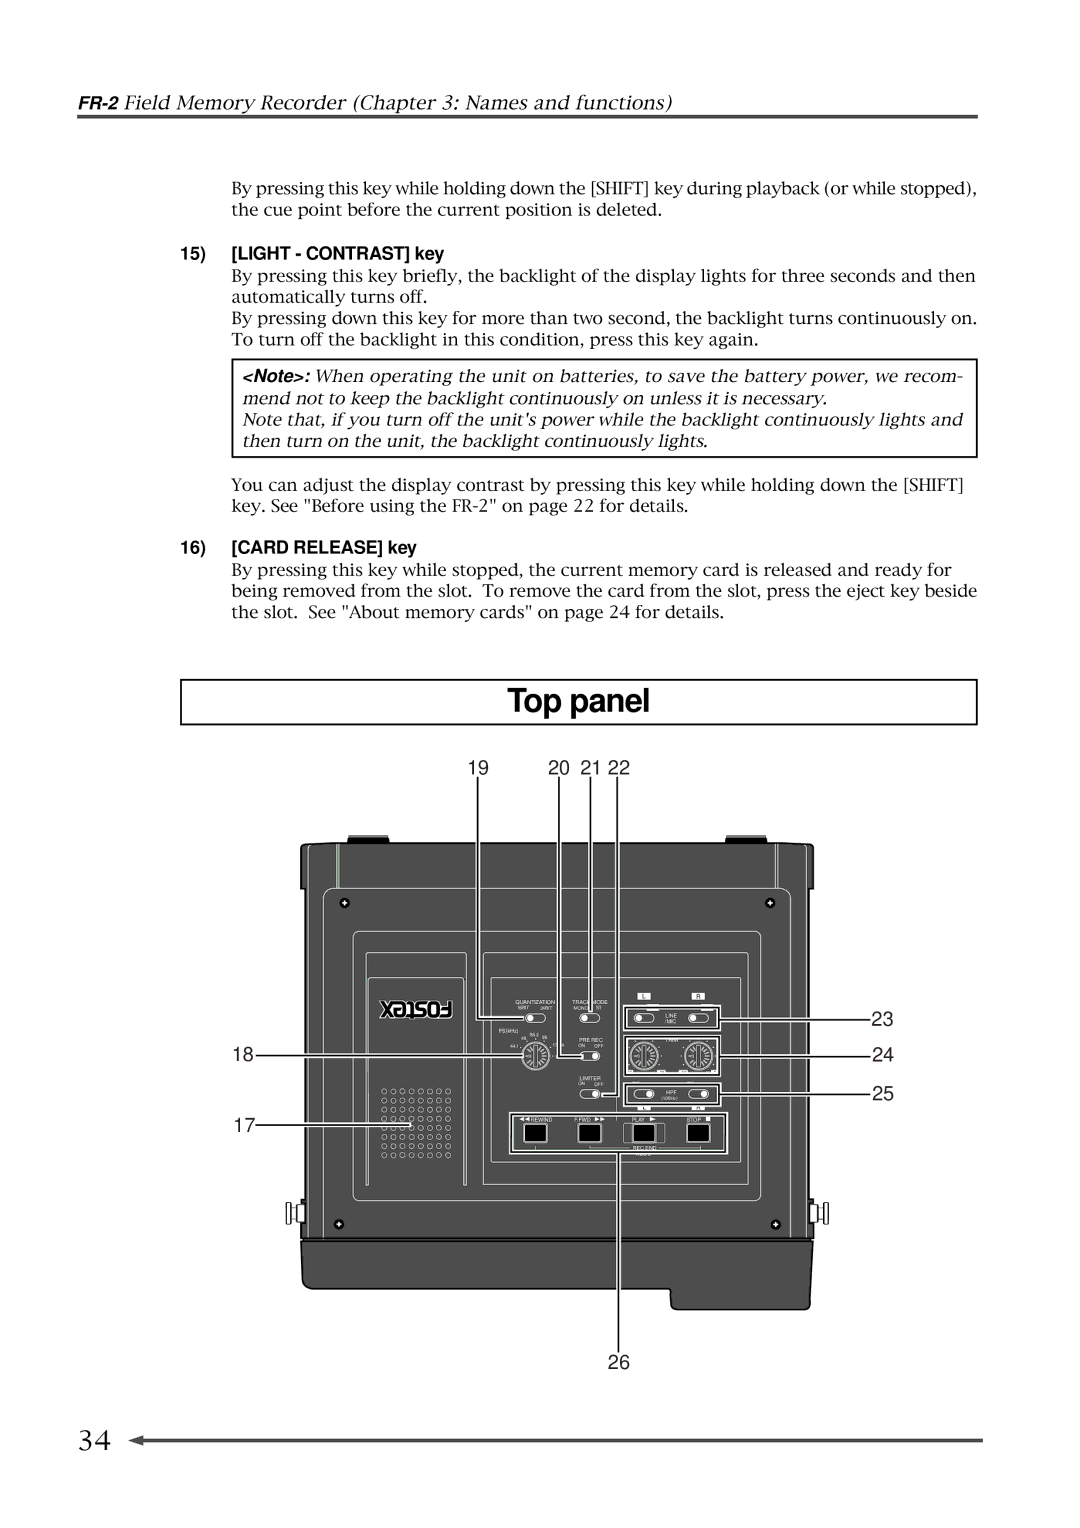 Fostex FR-2 owner manual Top panel, Light Contrast key, Card Release key 